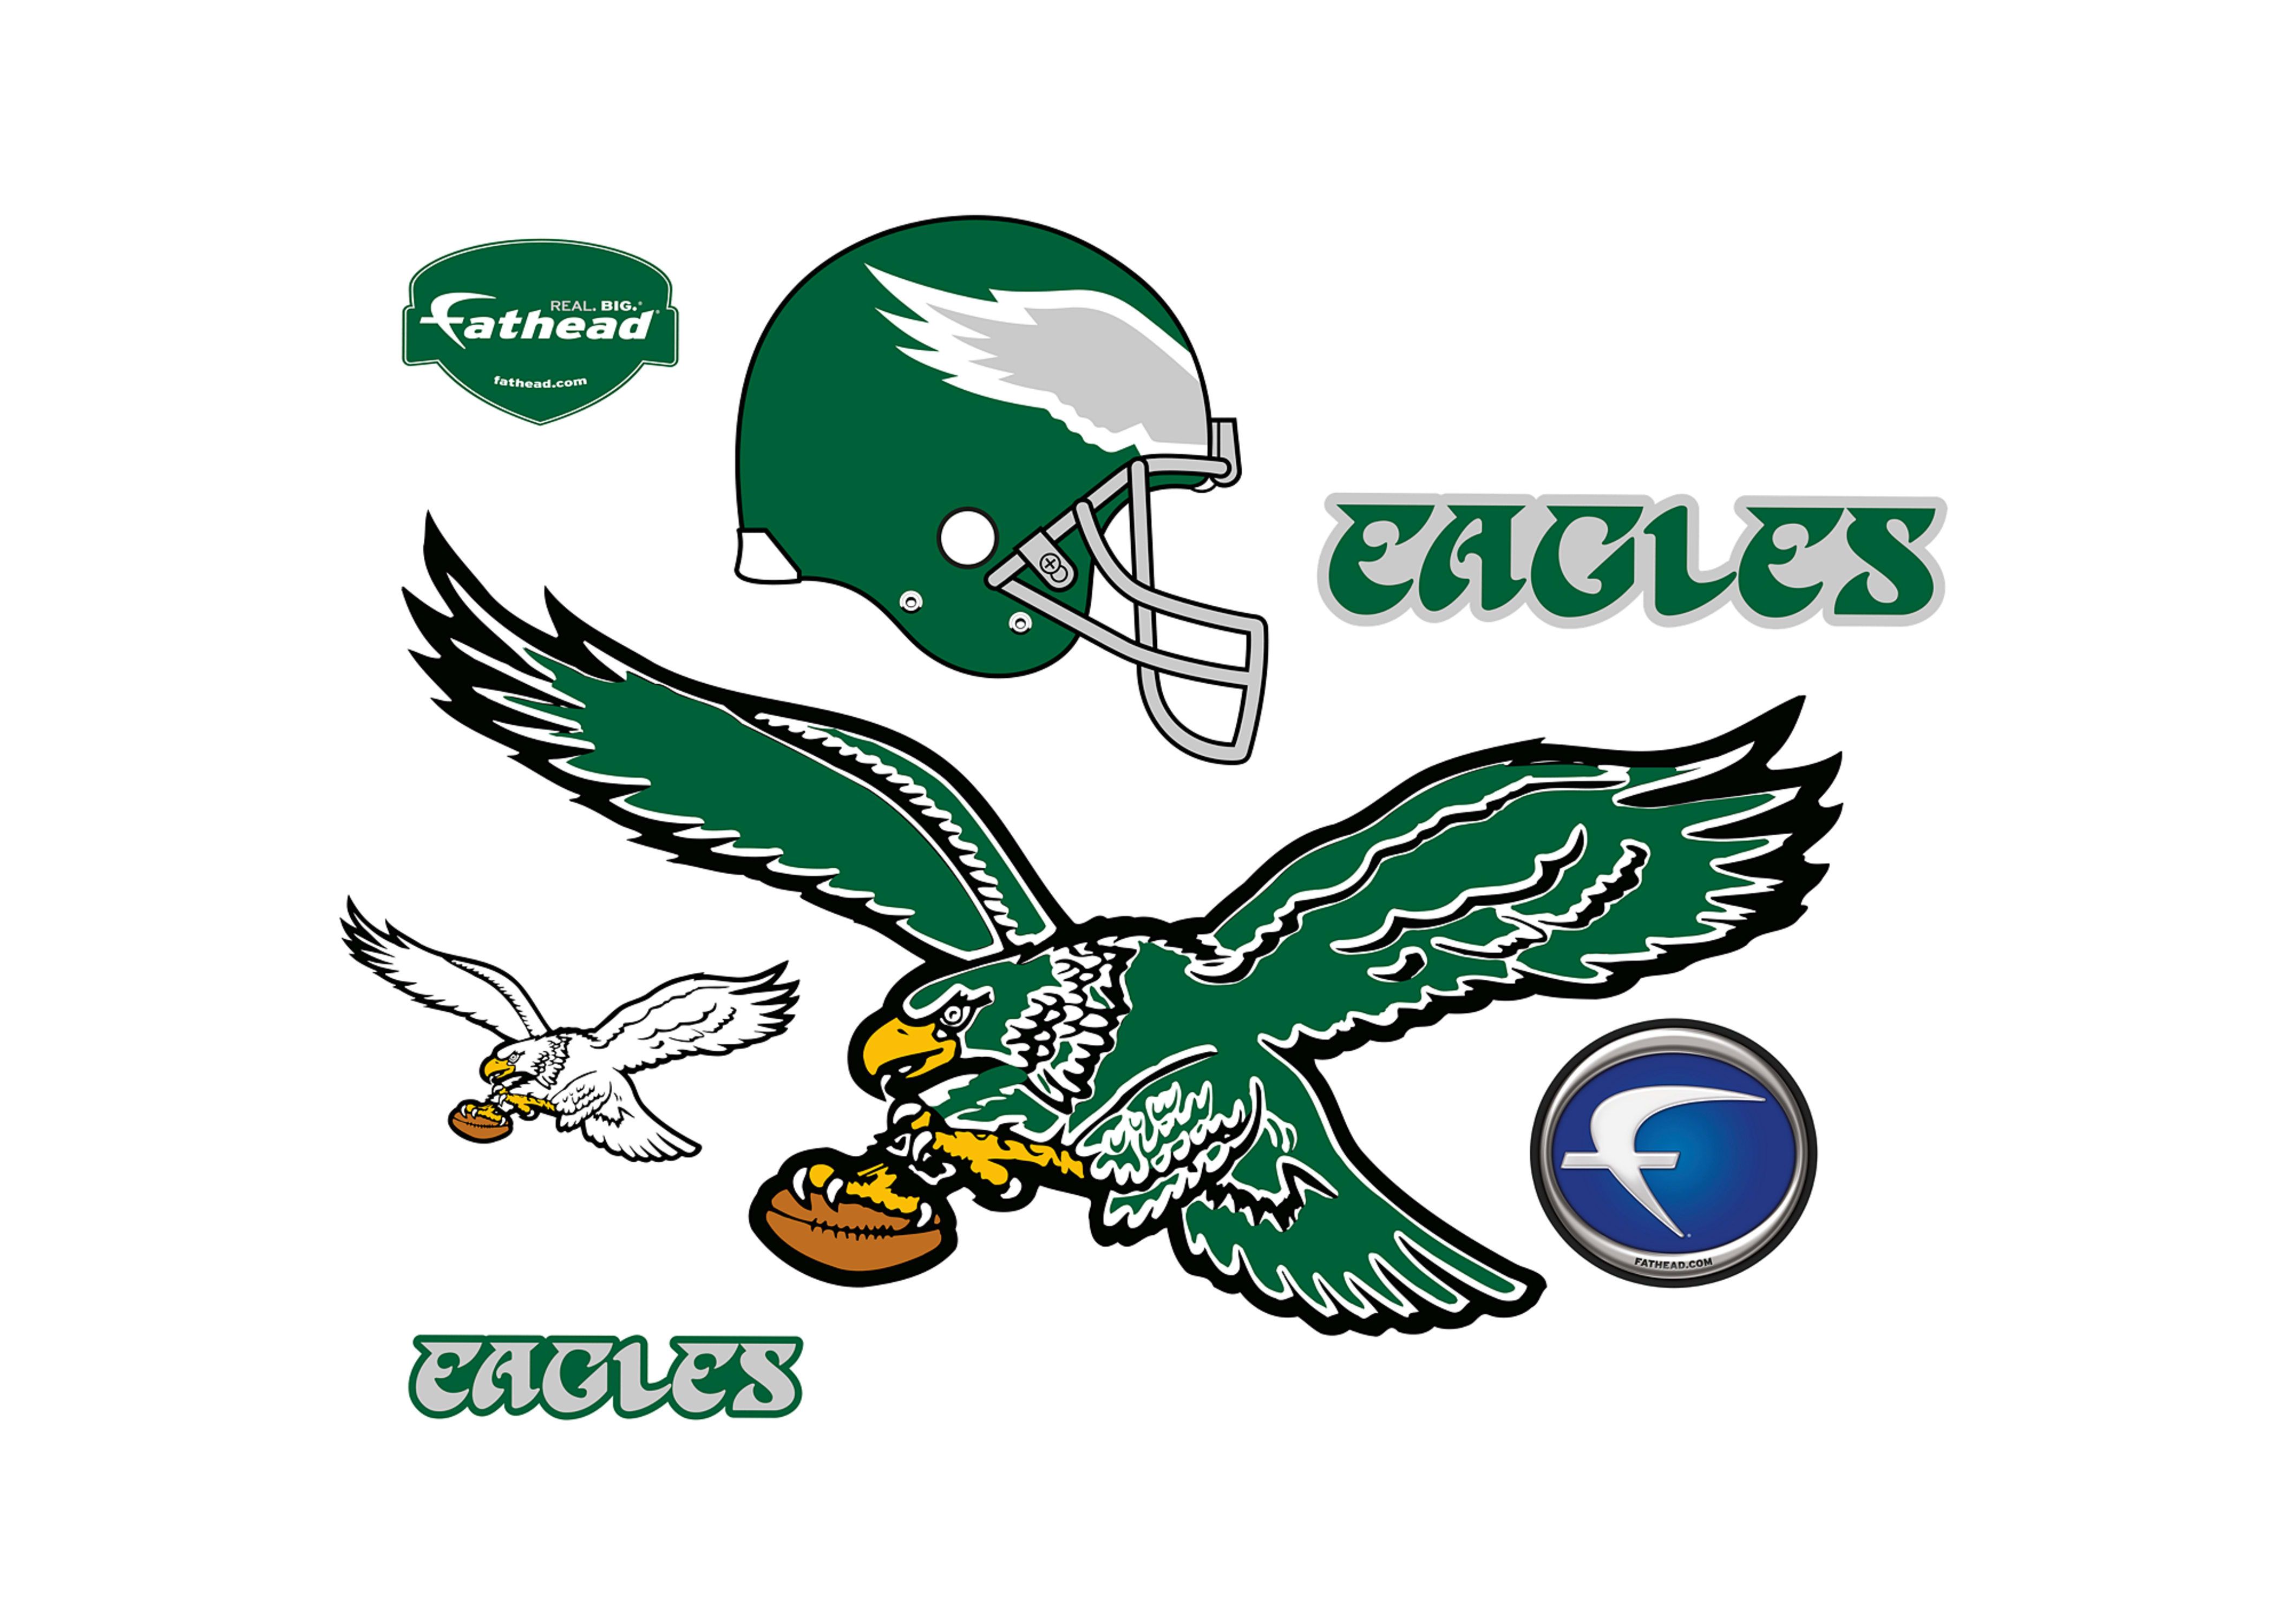 Classic eagles Logos